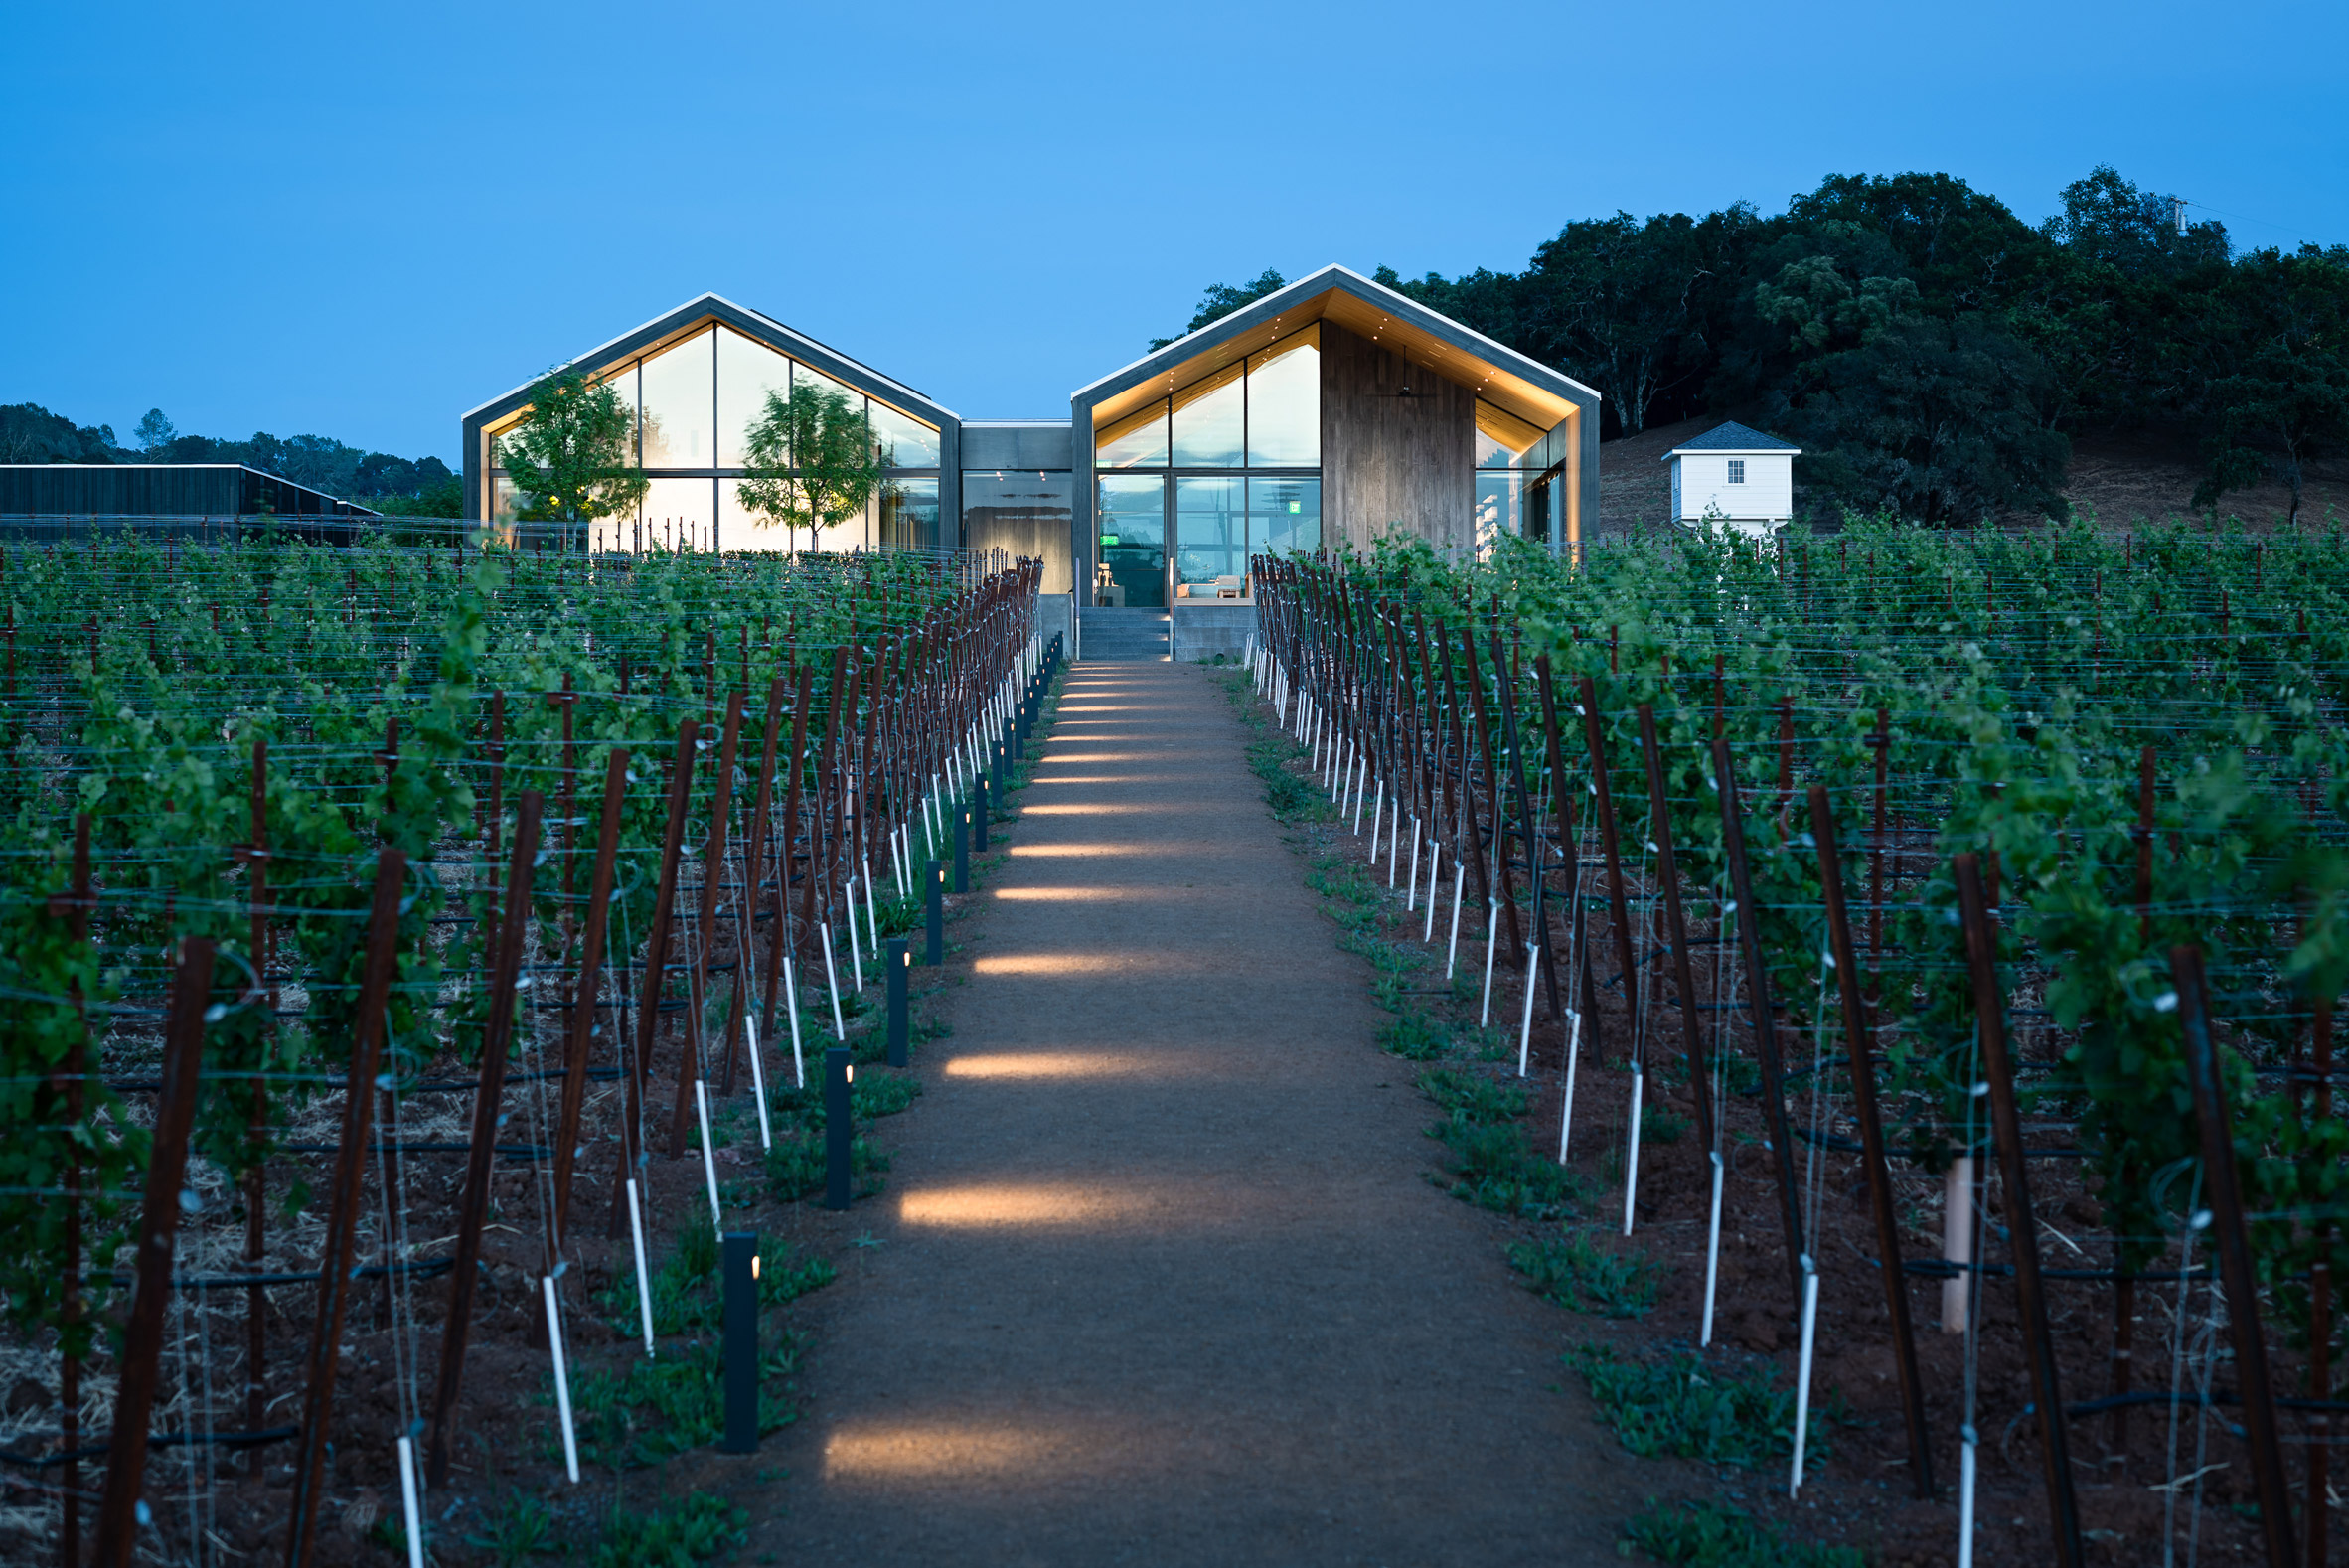 Photograph showing lit path through vineyard towards building